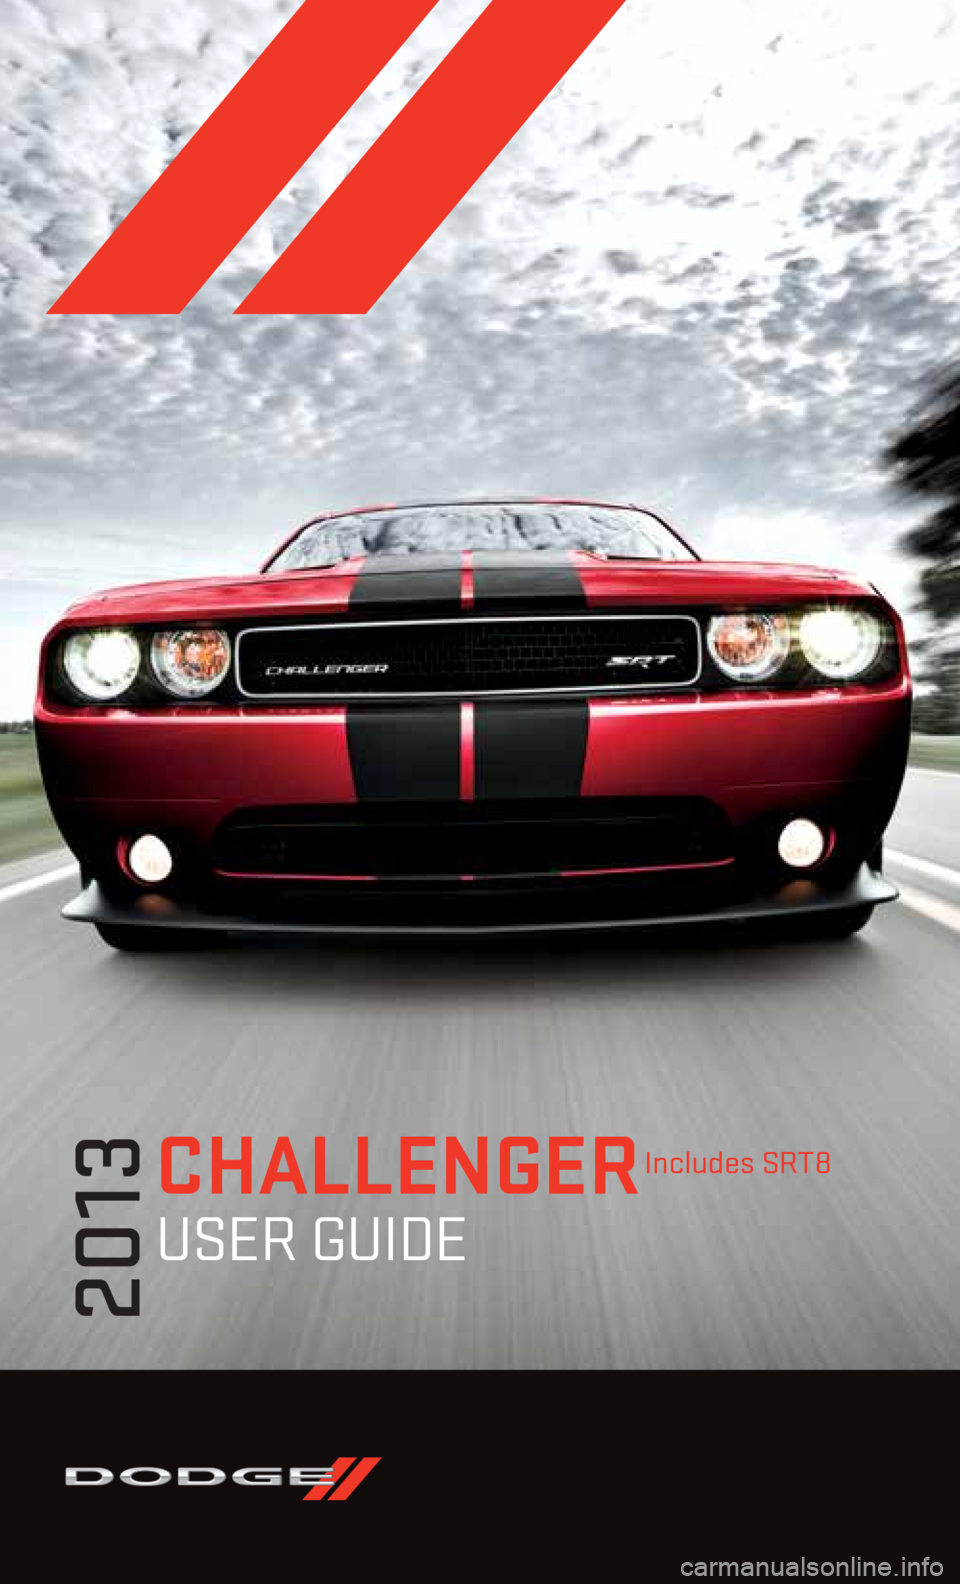 DODGE CHALLENGER 2013 3.G User Guide Challenger 
User GUide
2013
includes srT8 